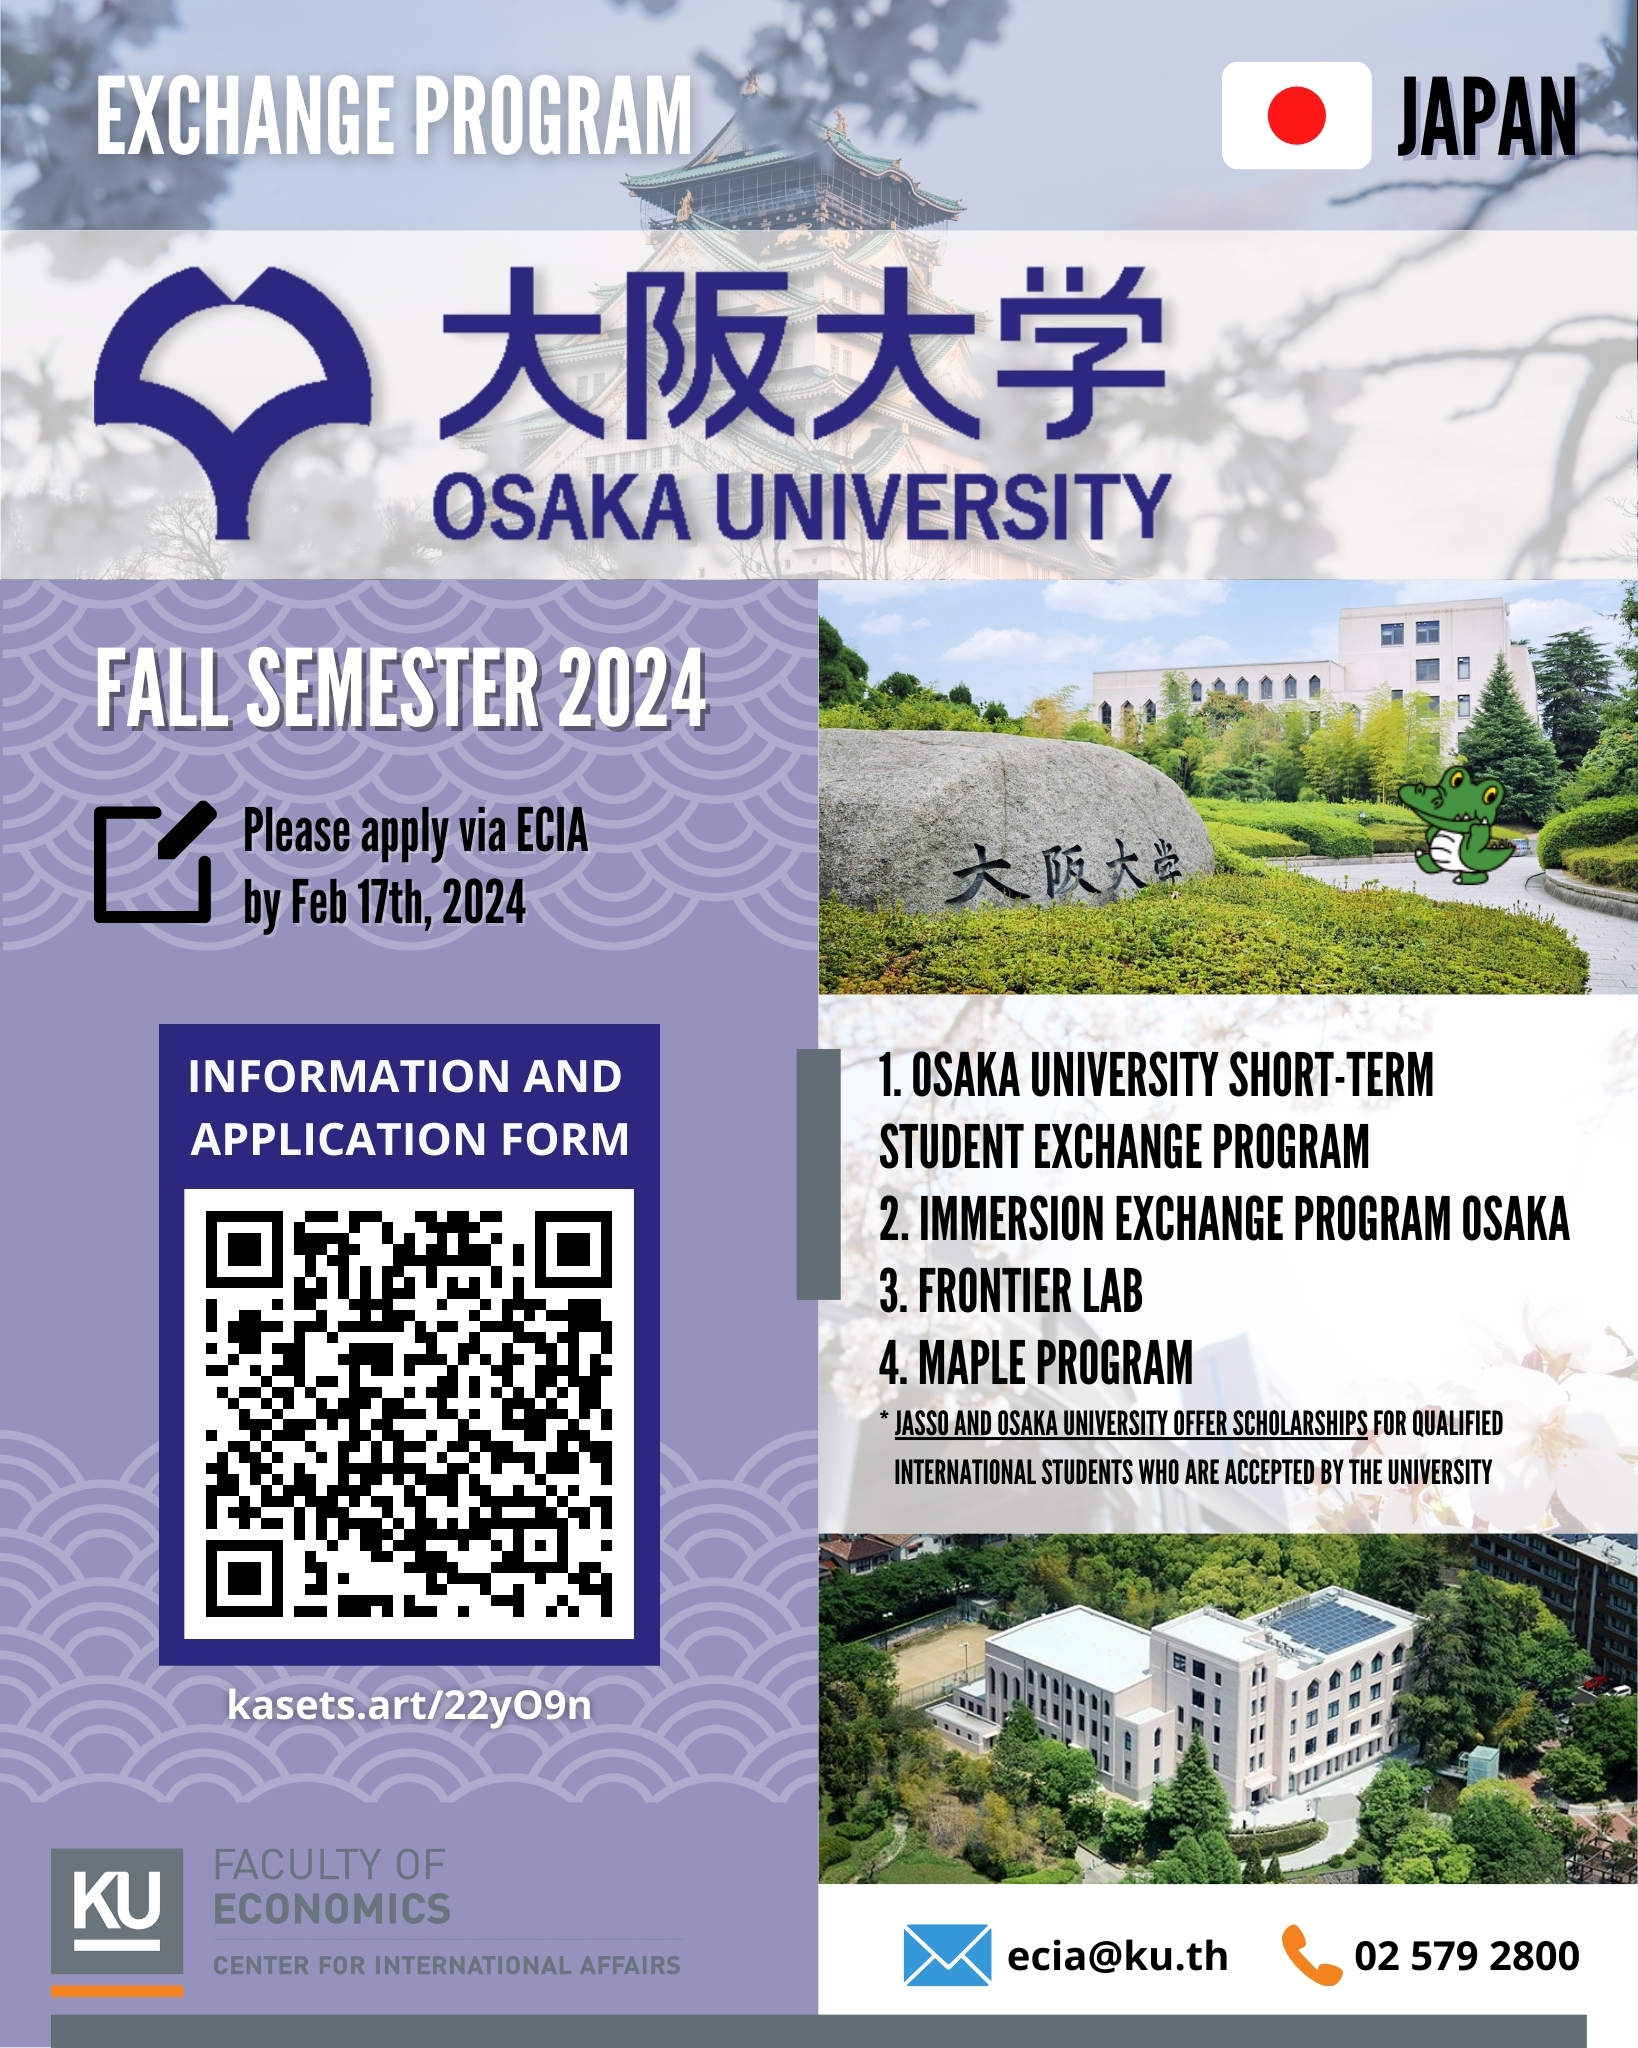 Exchange Program at OSAKA University, Japan (Fall Semester 2024) with scholarships offered